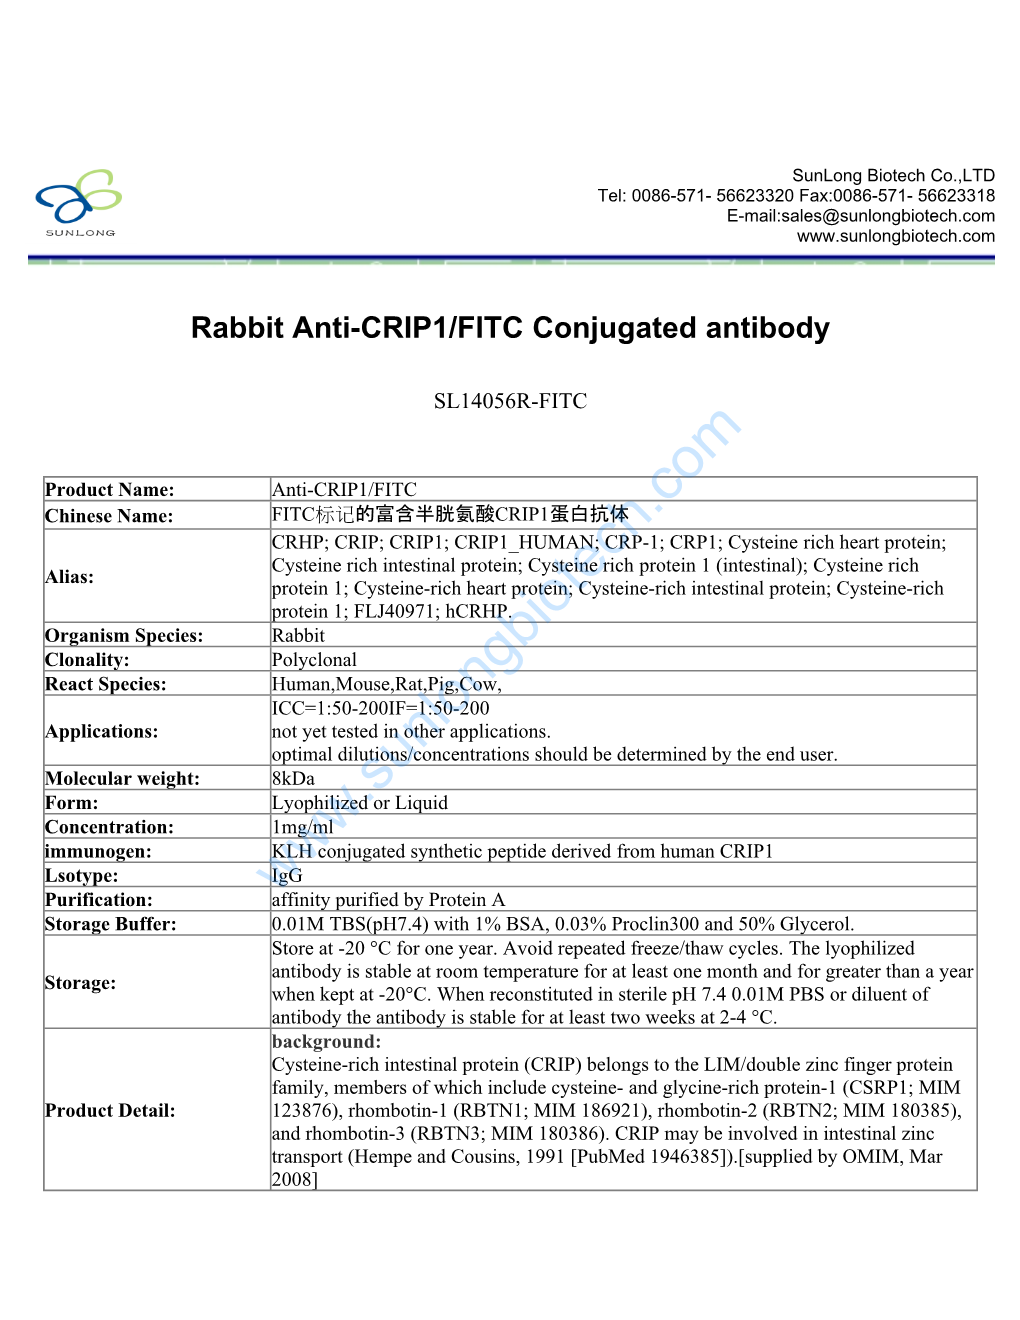 Rabbit Anti-CRIP1/FITC Conjugated Antibody-SL14056R-FITC